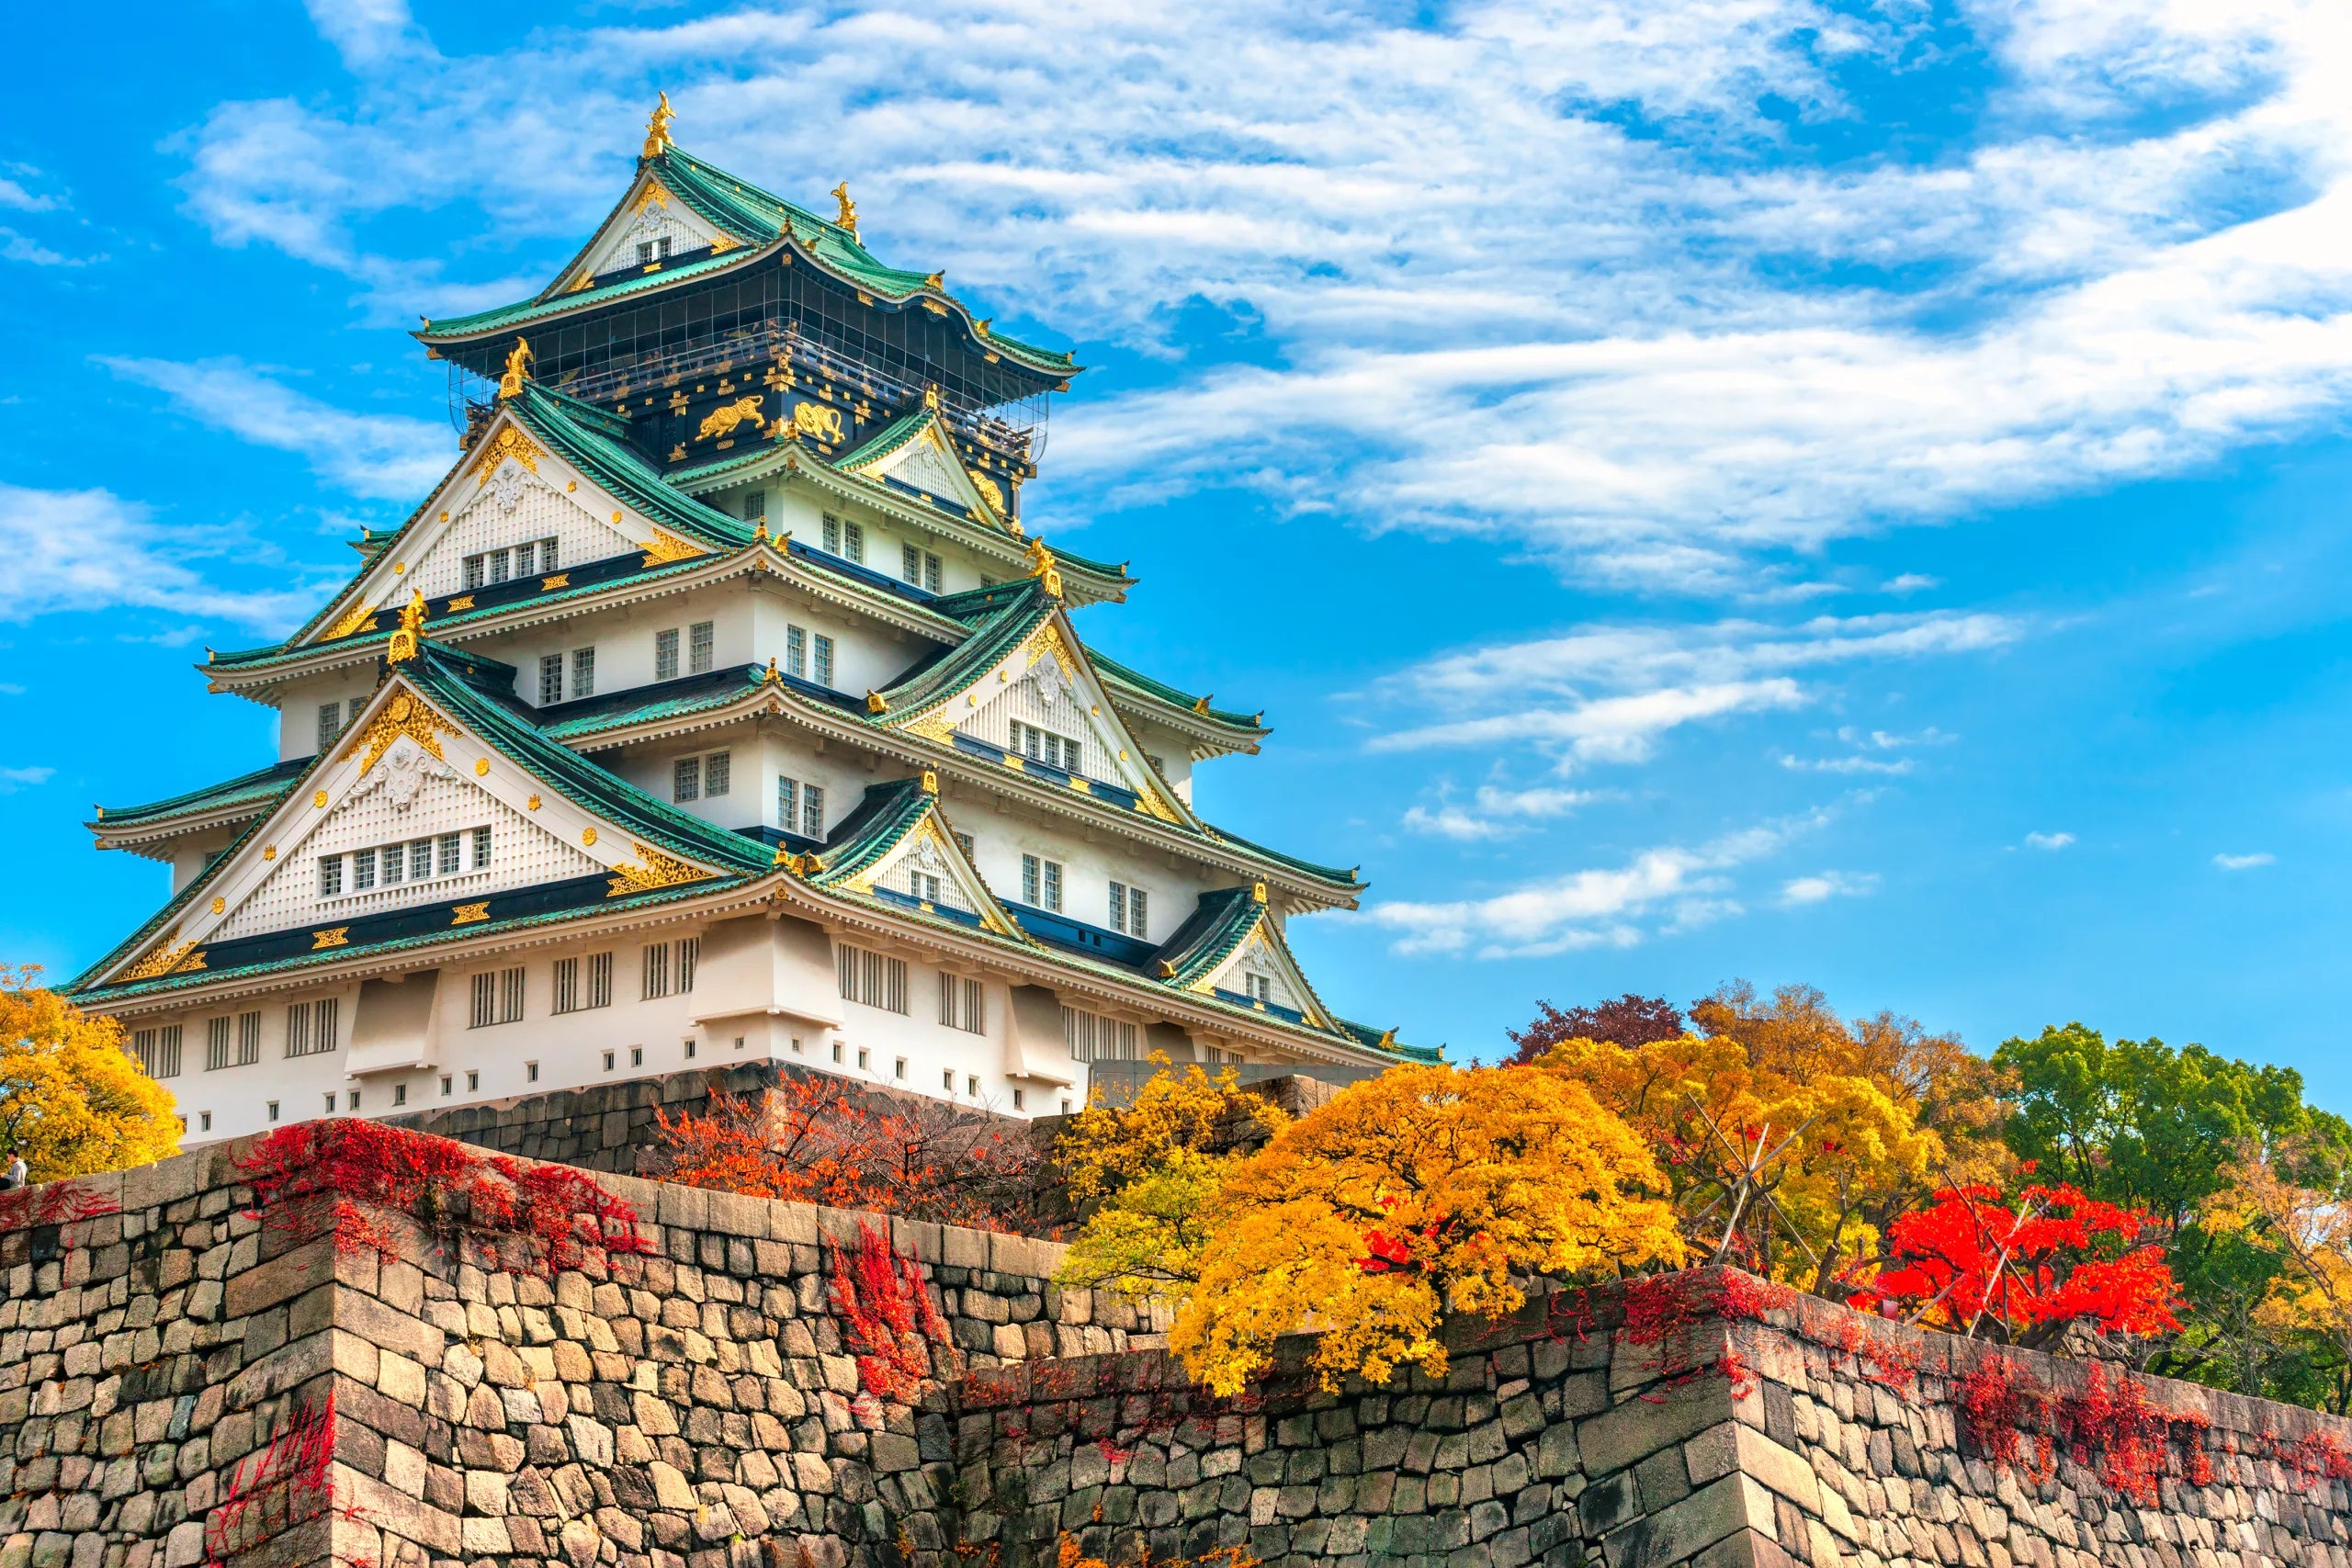 Let’s explore Nagoya! Samurai History, crafts, and culture!